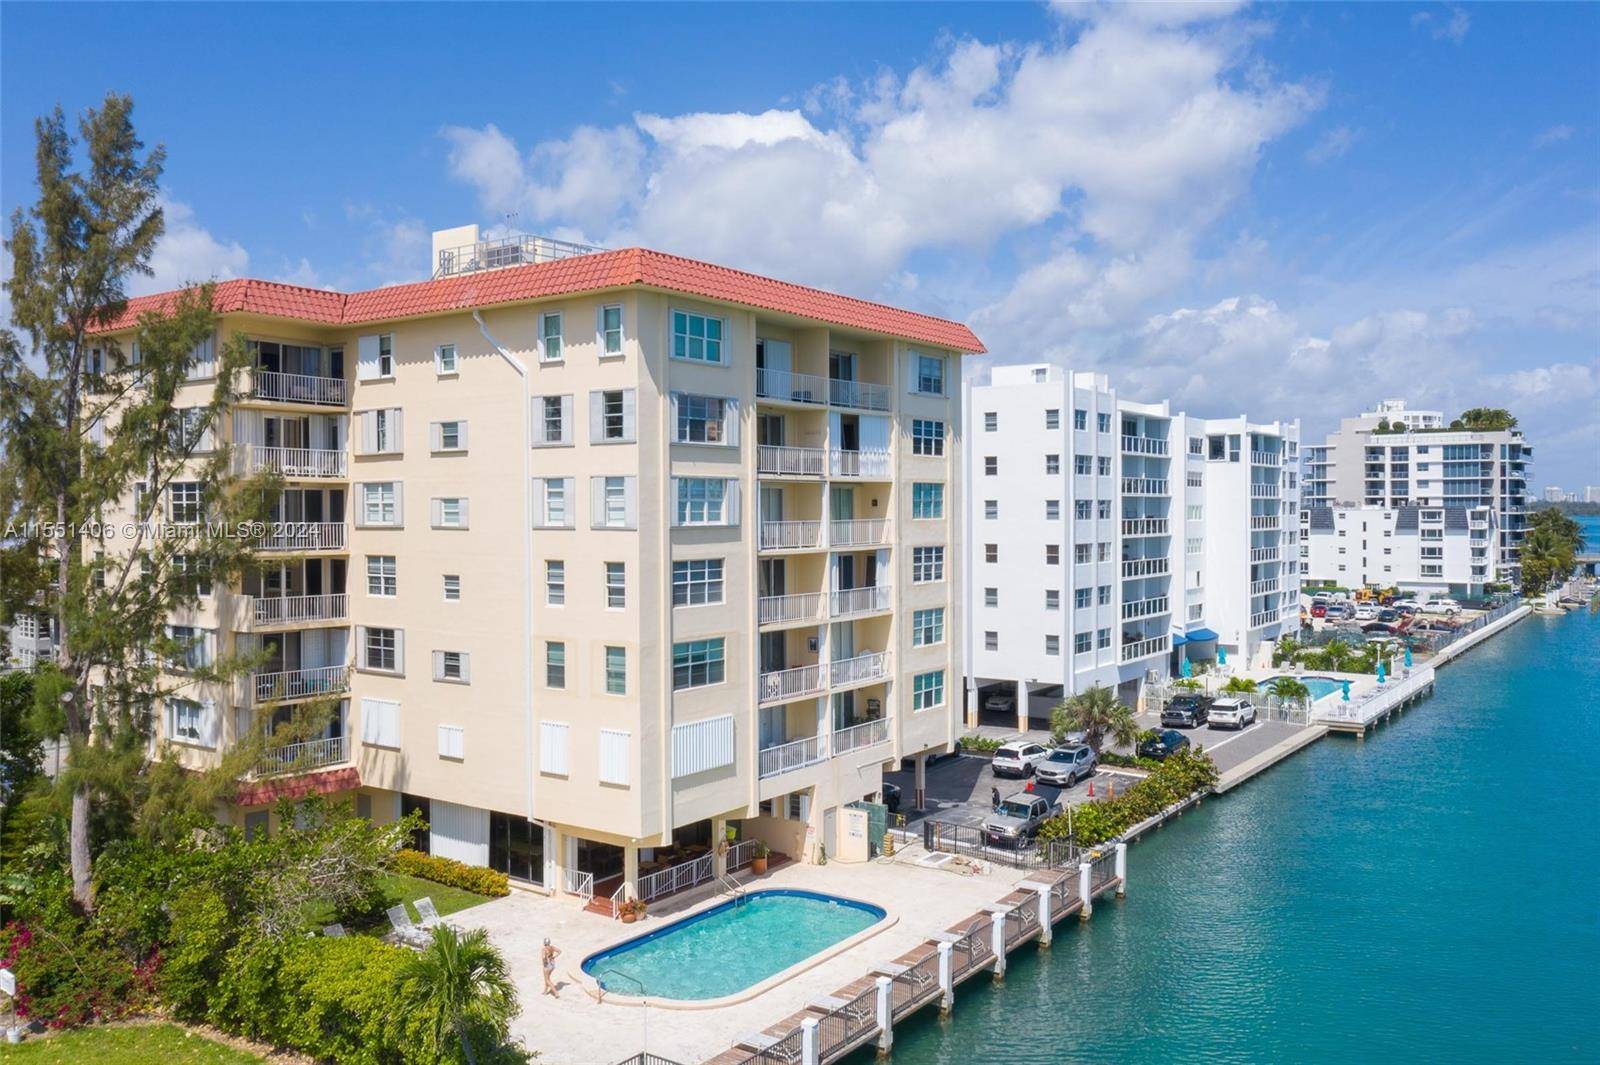 Stunning 2 bedrooms 2. 5 baths Bay Harbor Penthouse overlooking breathtaking unobstructed water, ocean and skyline views.